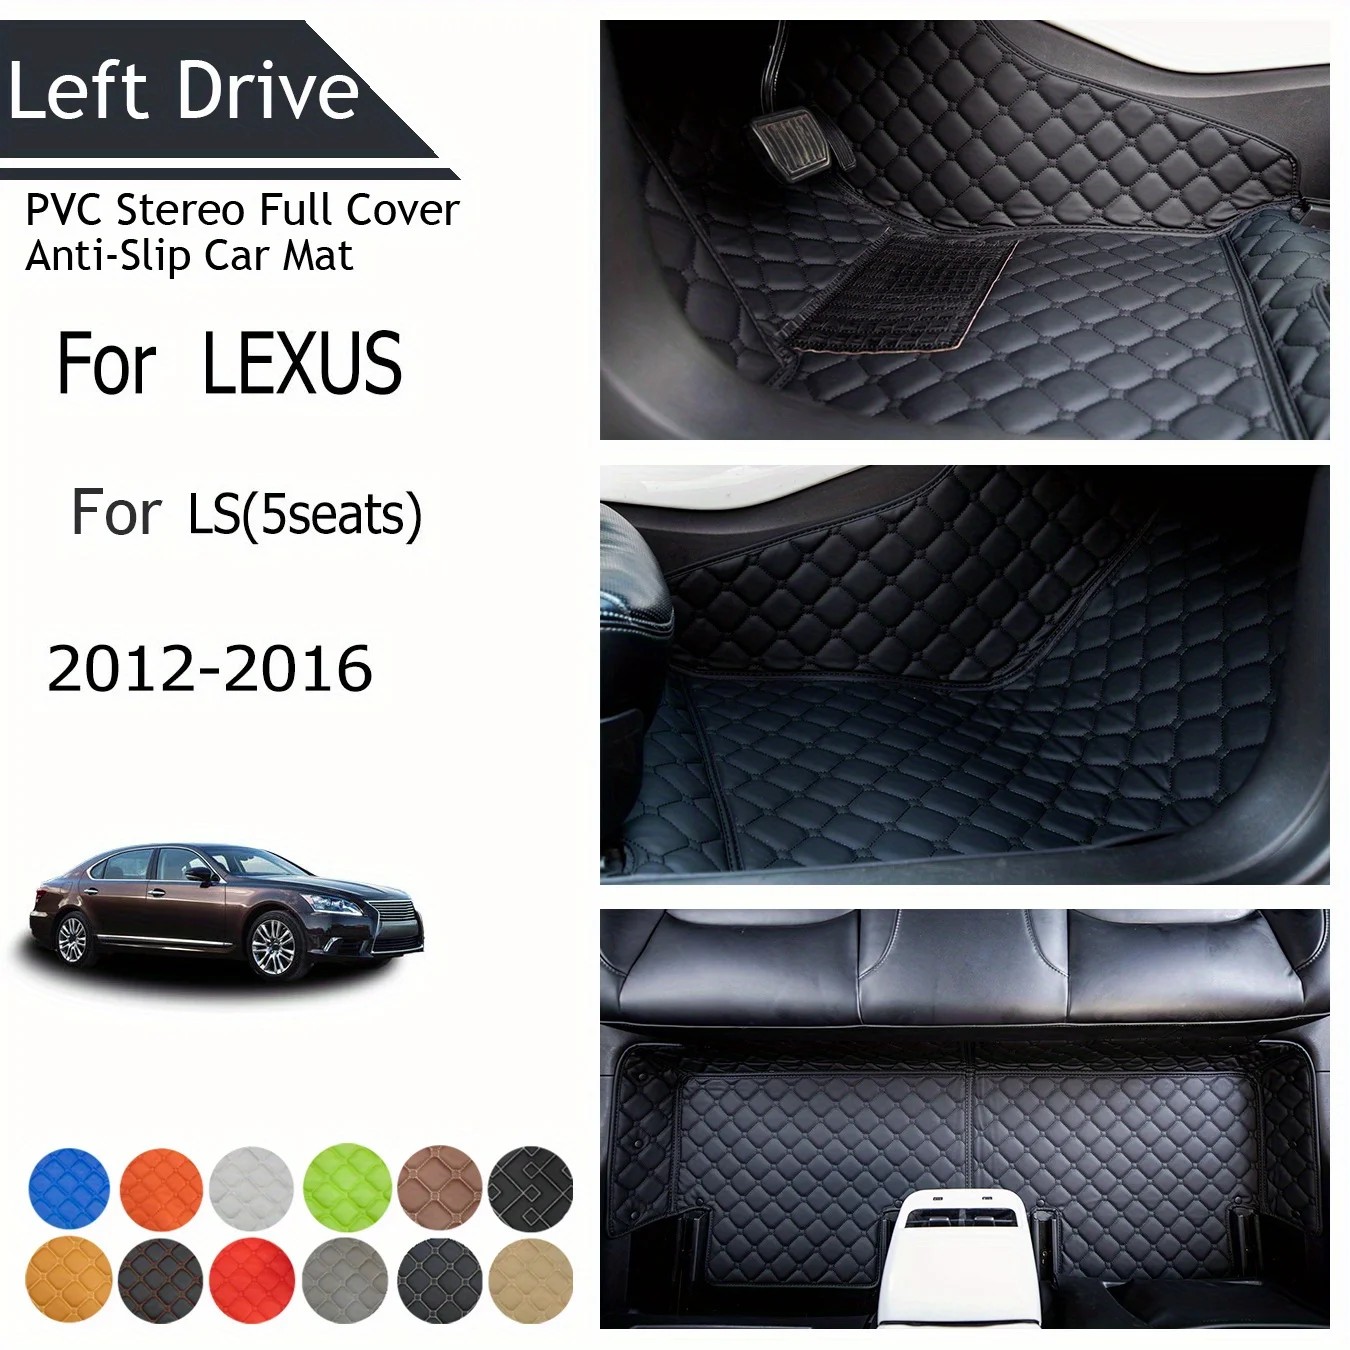 

TEGART 【LHD】For LEXUS For LS(5seats) 2012-2016 Three Layer PVC Stereo Full Cover Anti-Slip Car Matcar Mats Floor Car Accessories